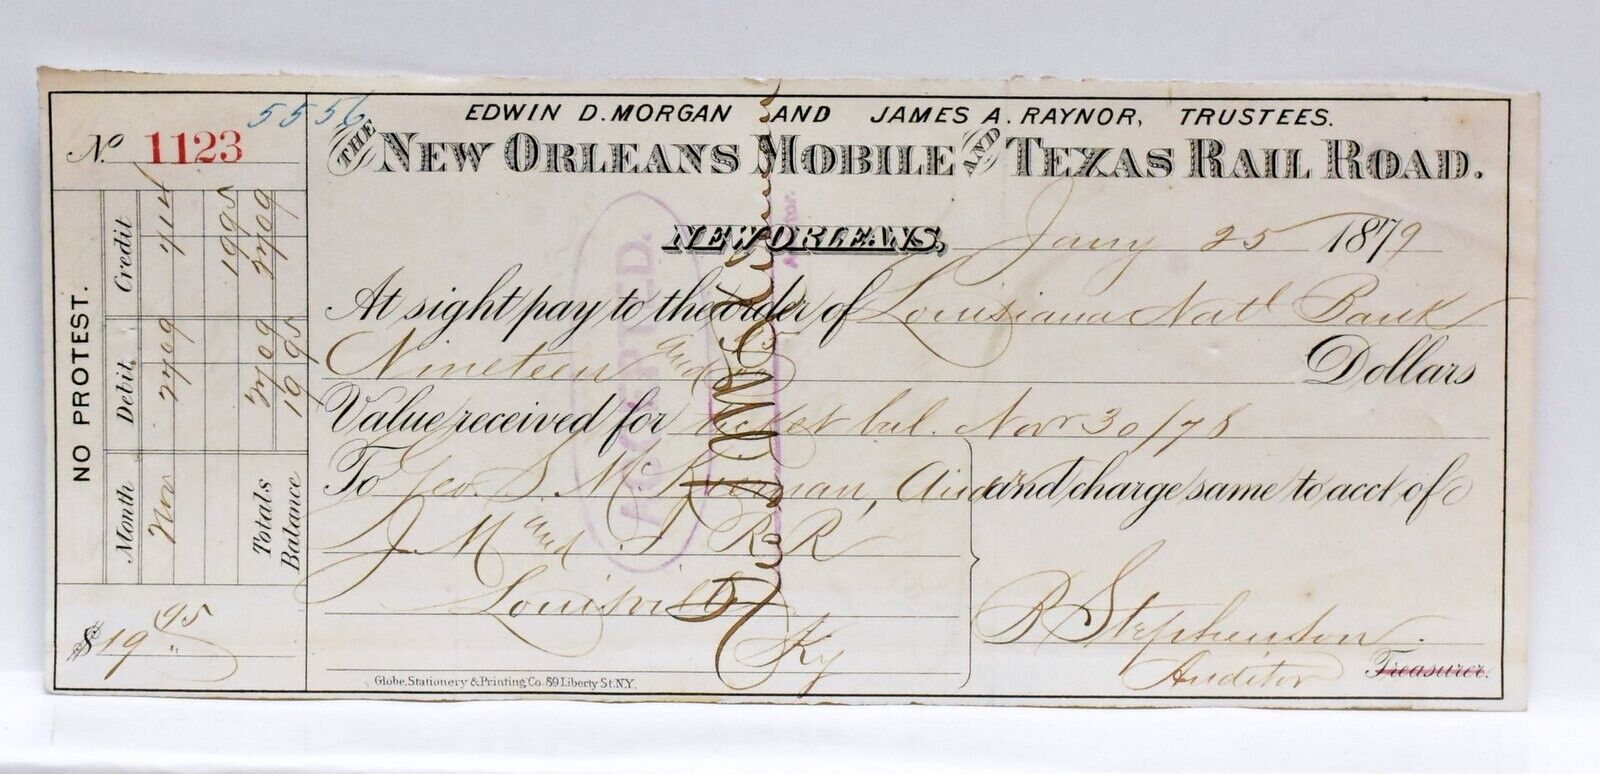 New Orleans Mobile & Texas Railroad 1879 to JM&I RR Antique Bank Check